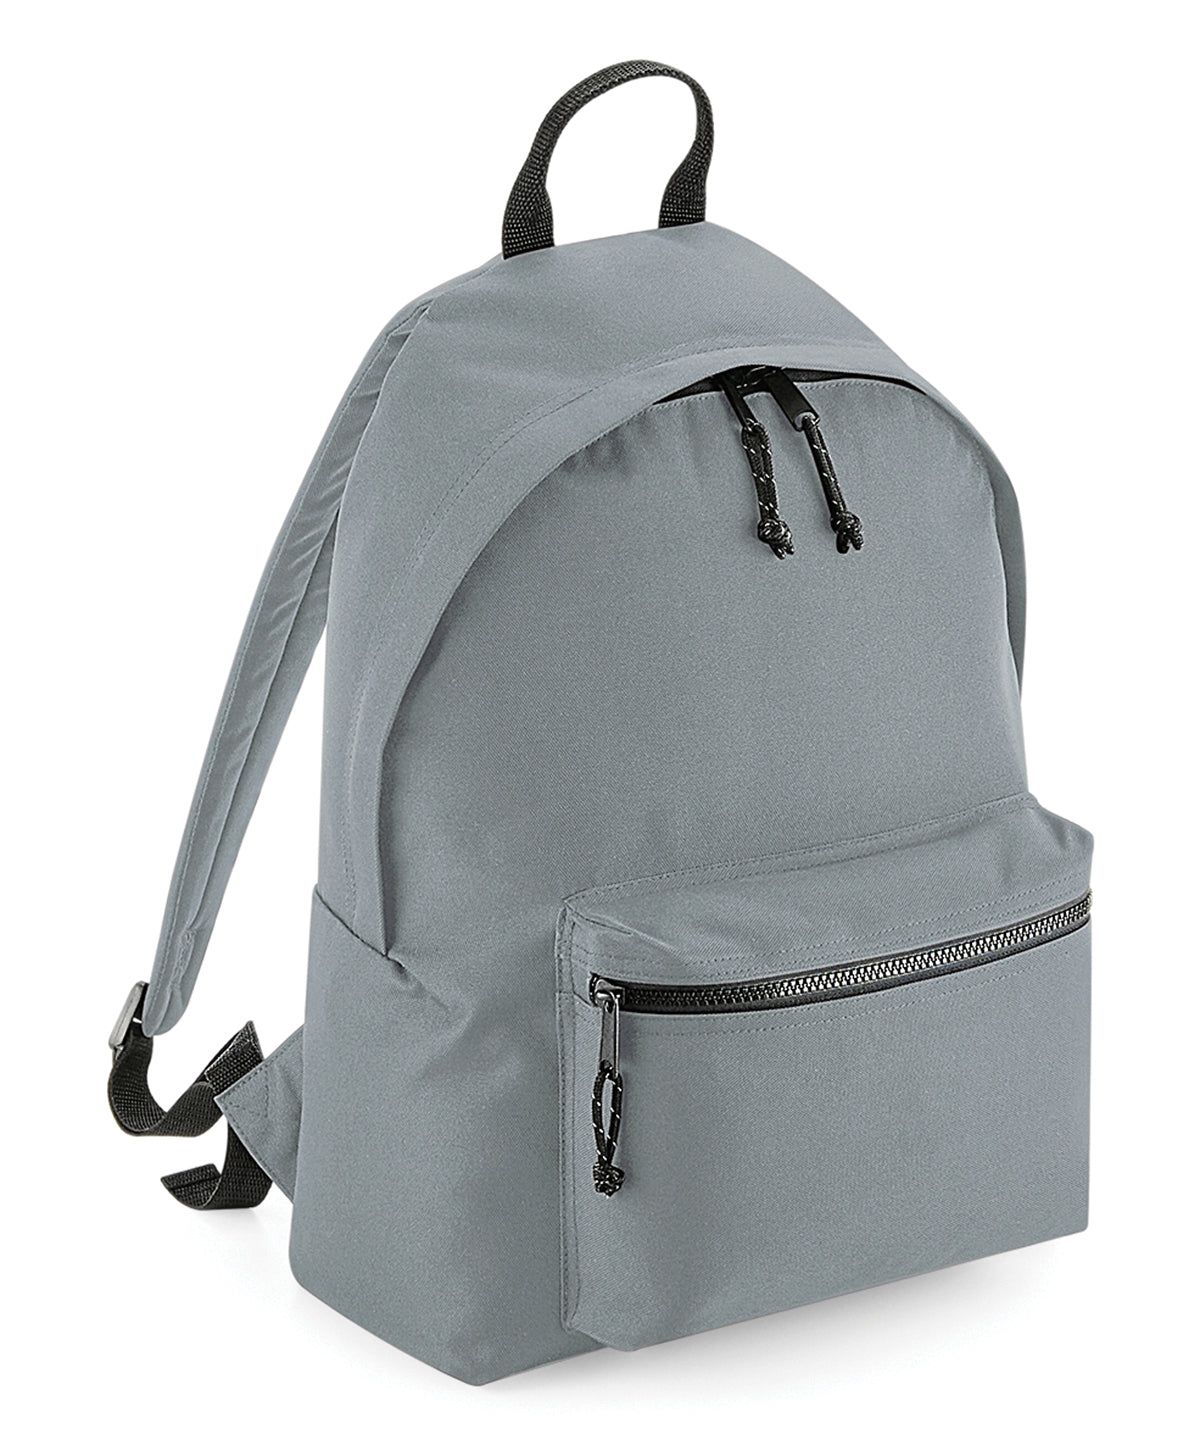 Bagbase Recycled Backpack